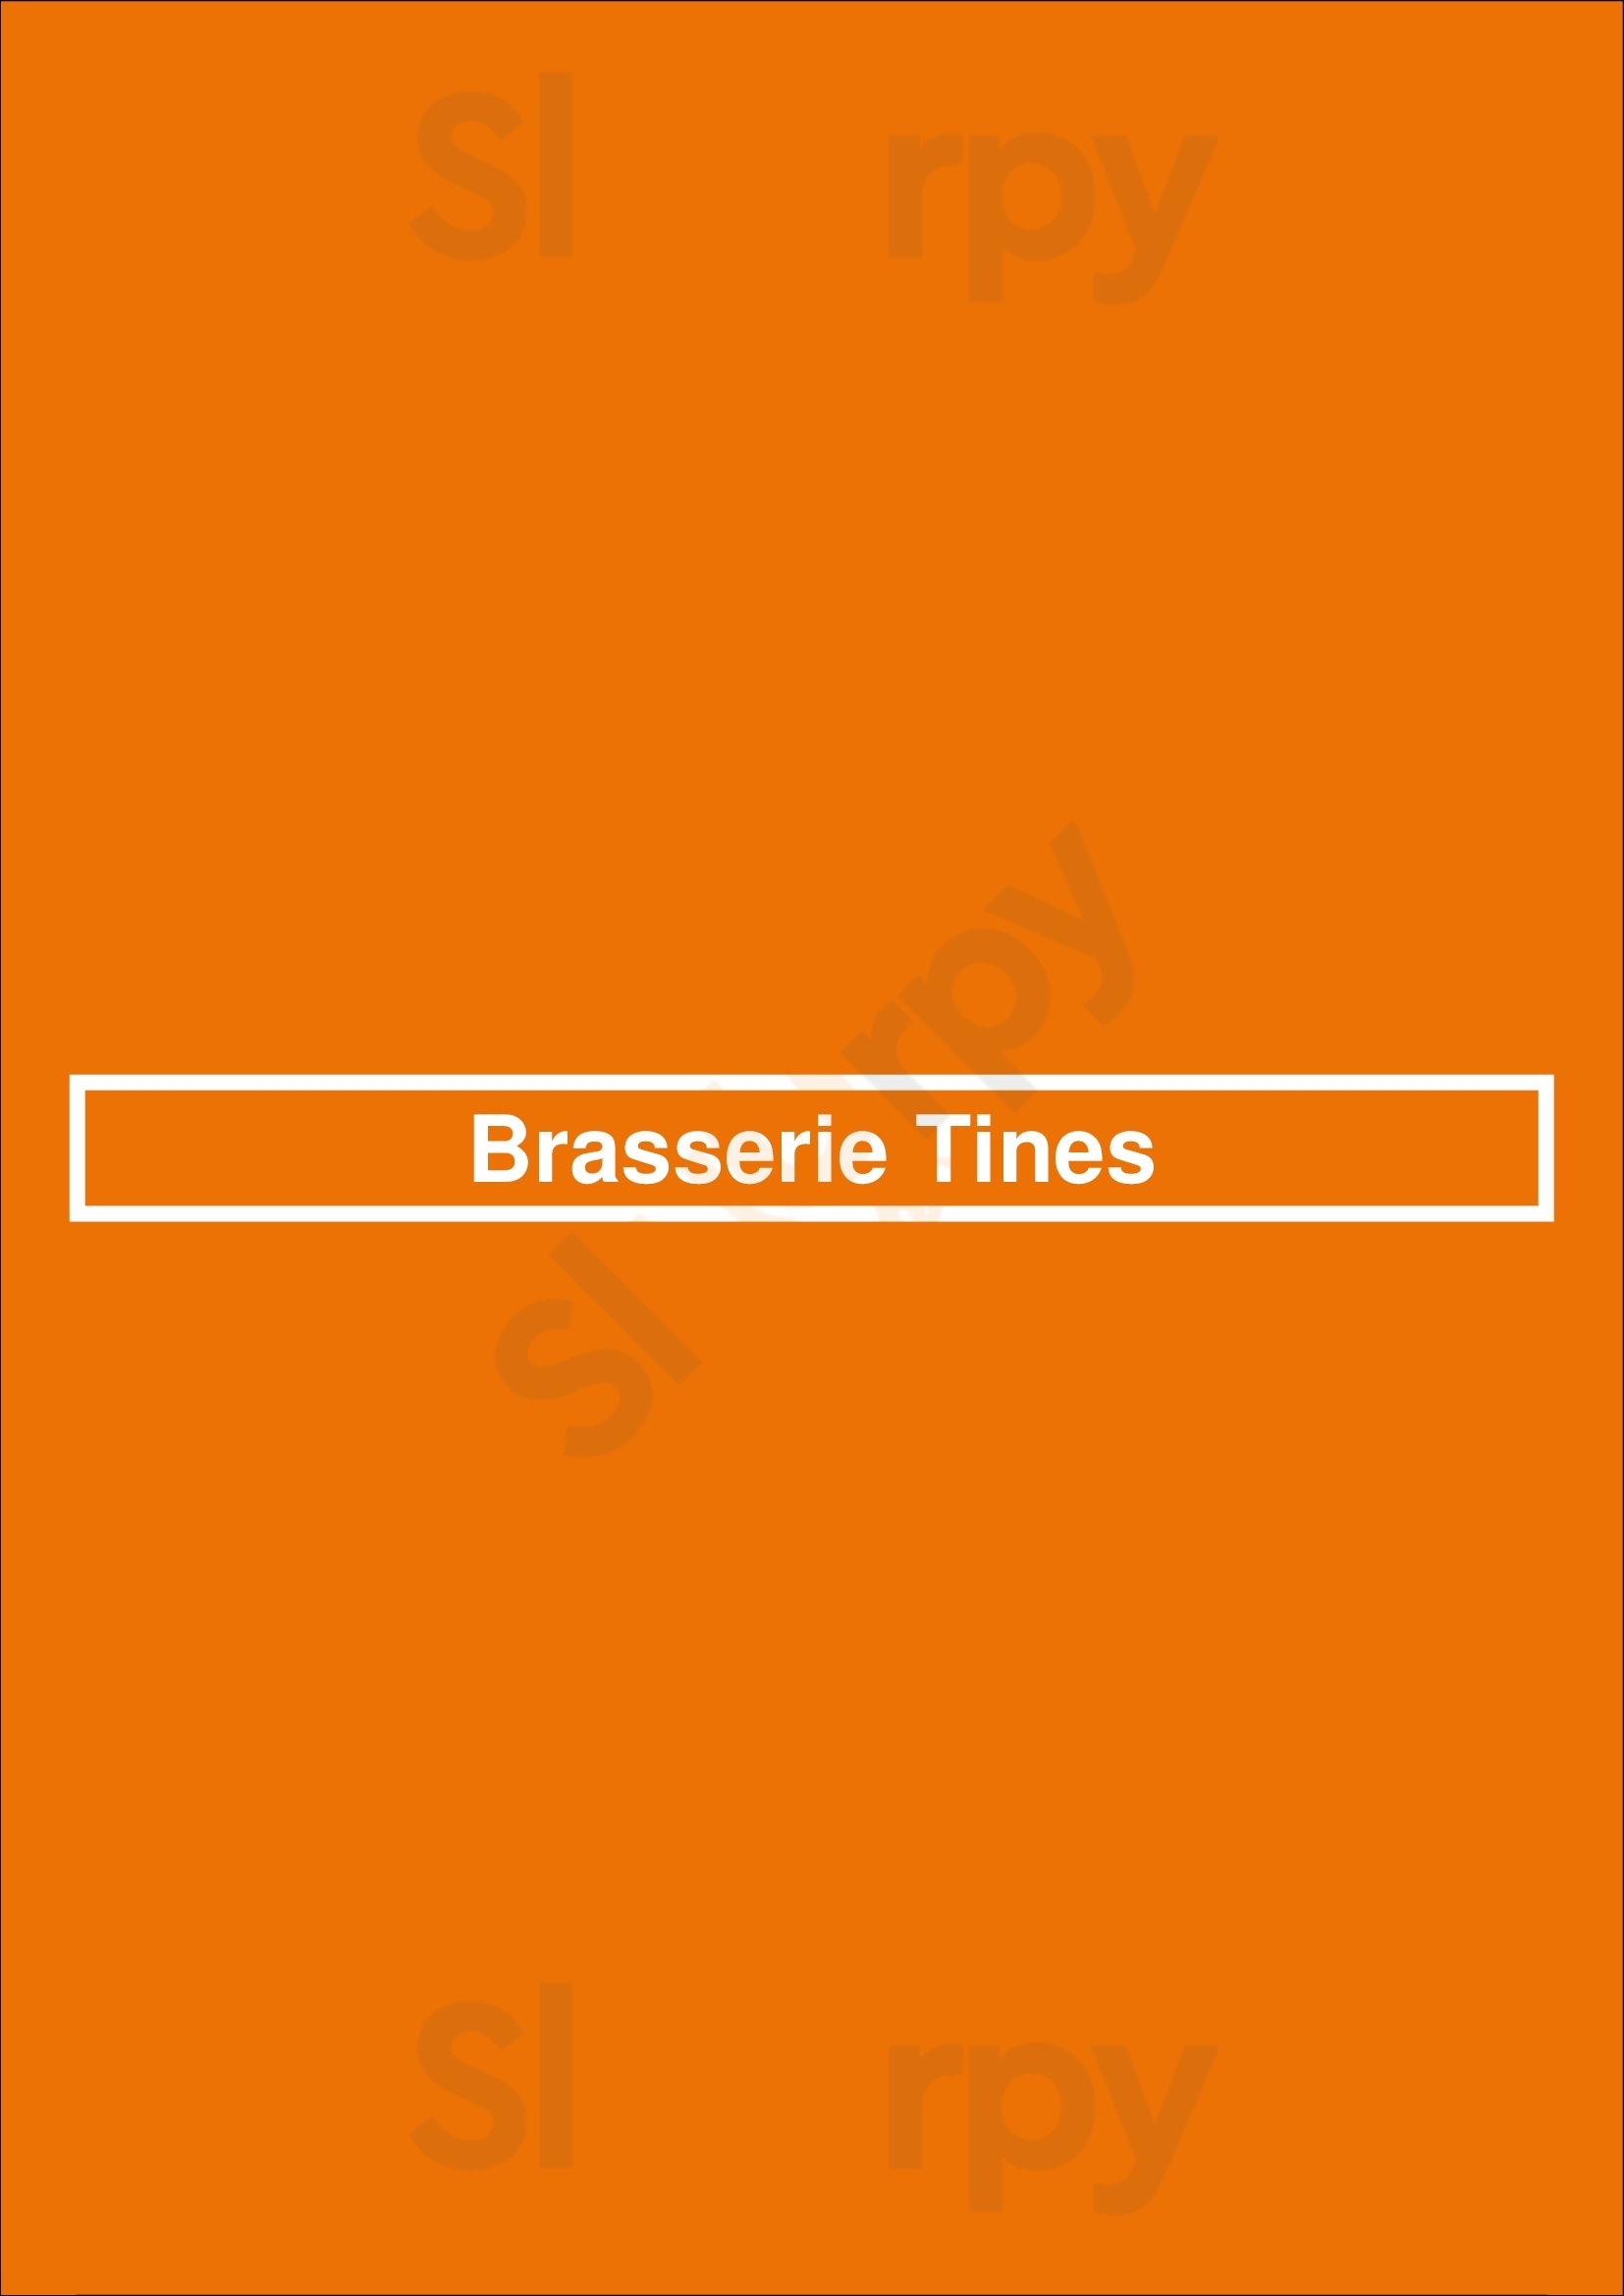 Brasserie Tines Rotterdam Menu - 1